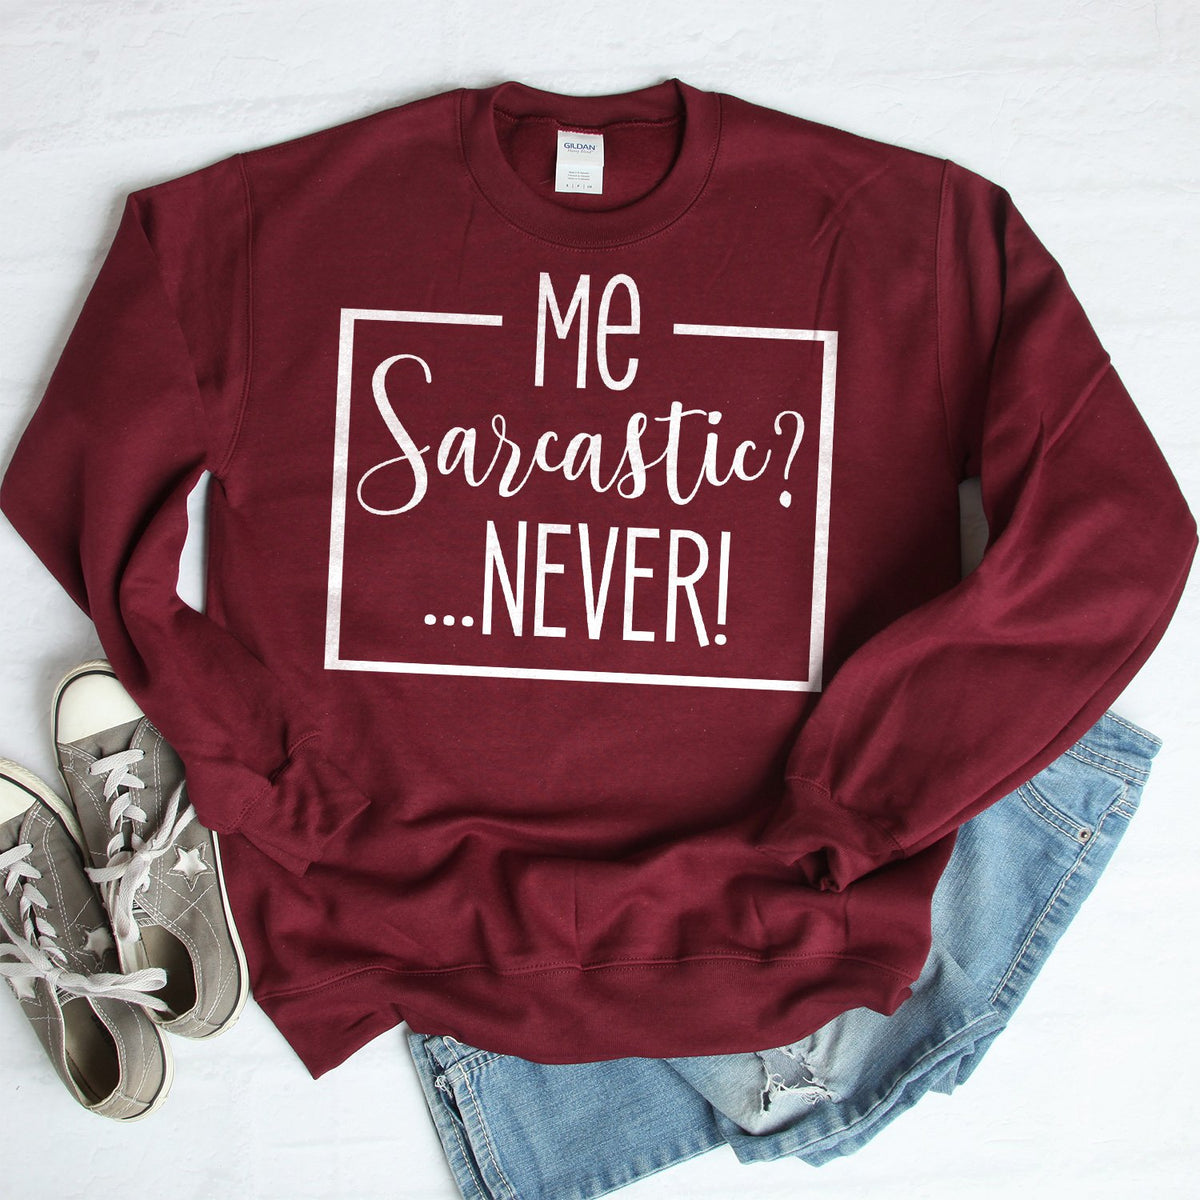 Me Sarcastic?... Never! - Long Sleeve Heavy Crewneck Sweatshirt